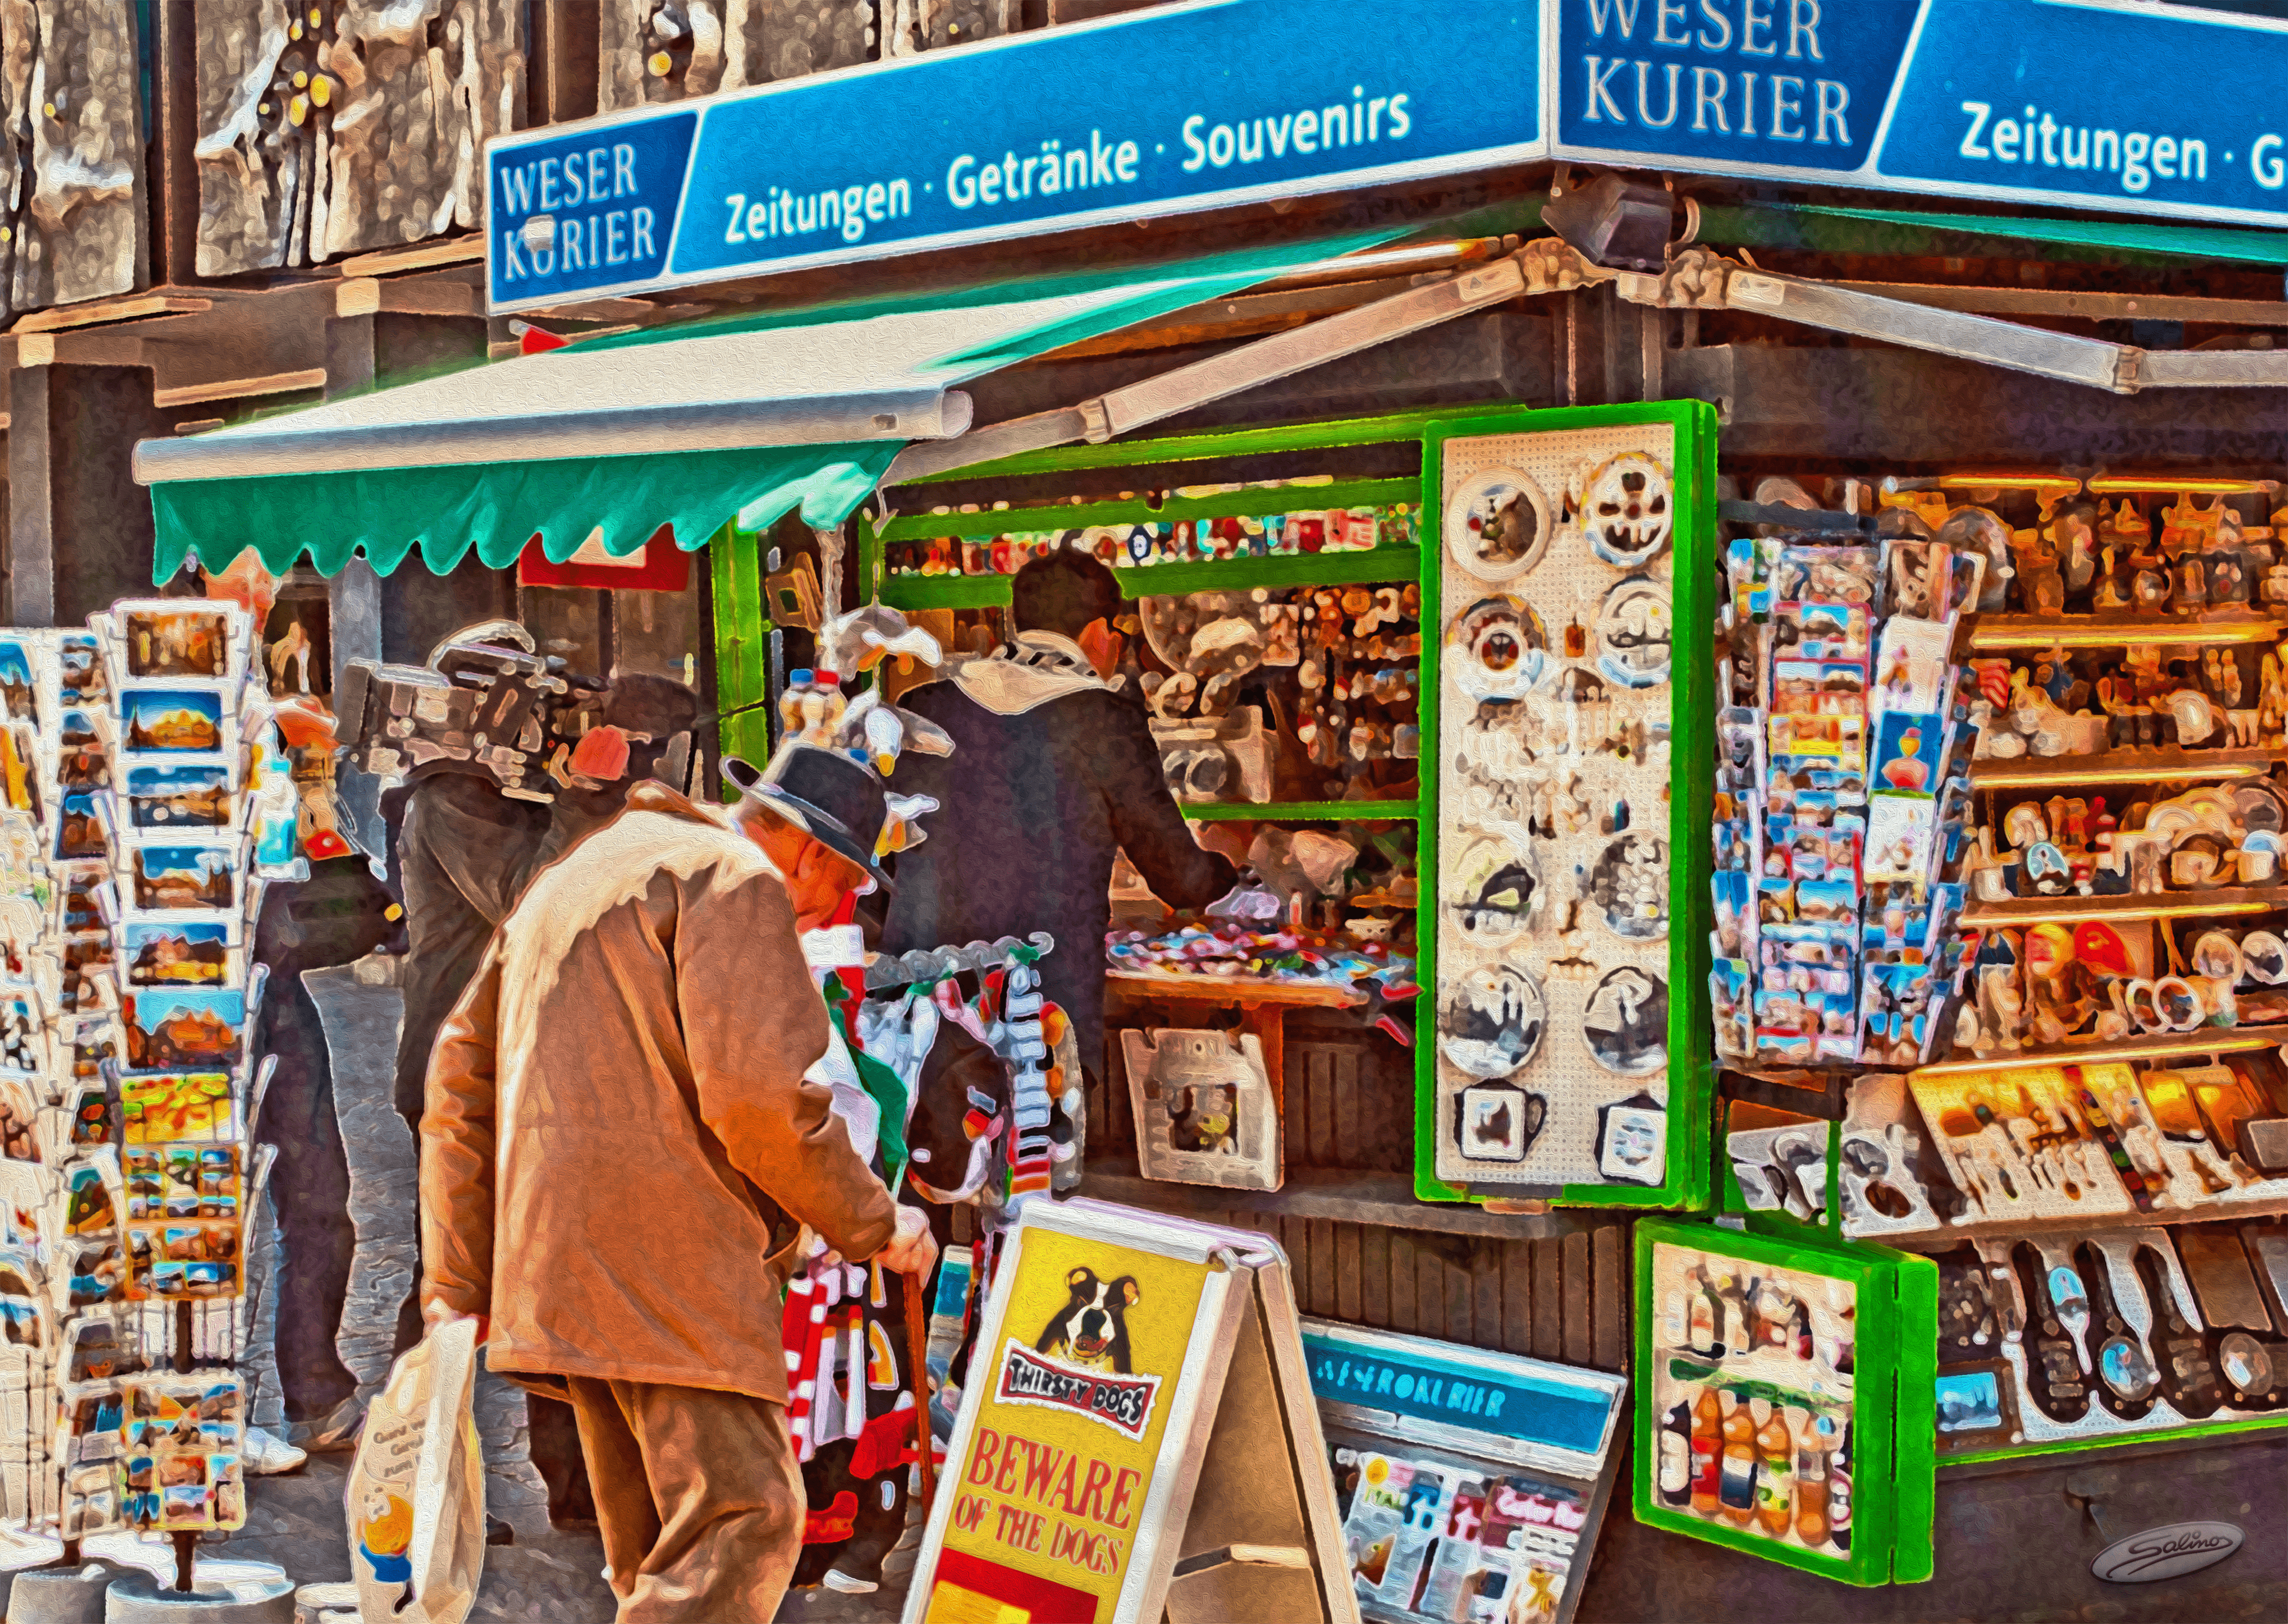 At the kiosk in the city – Bremen